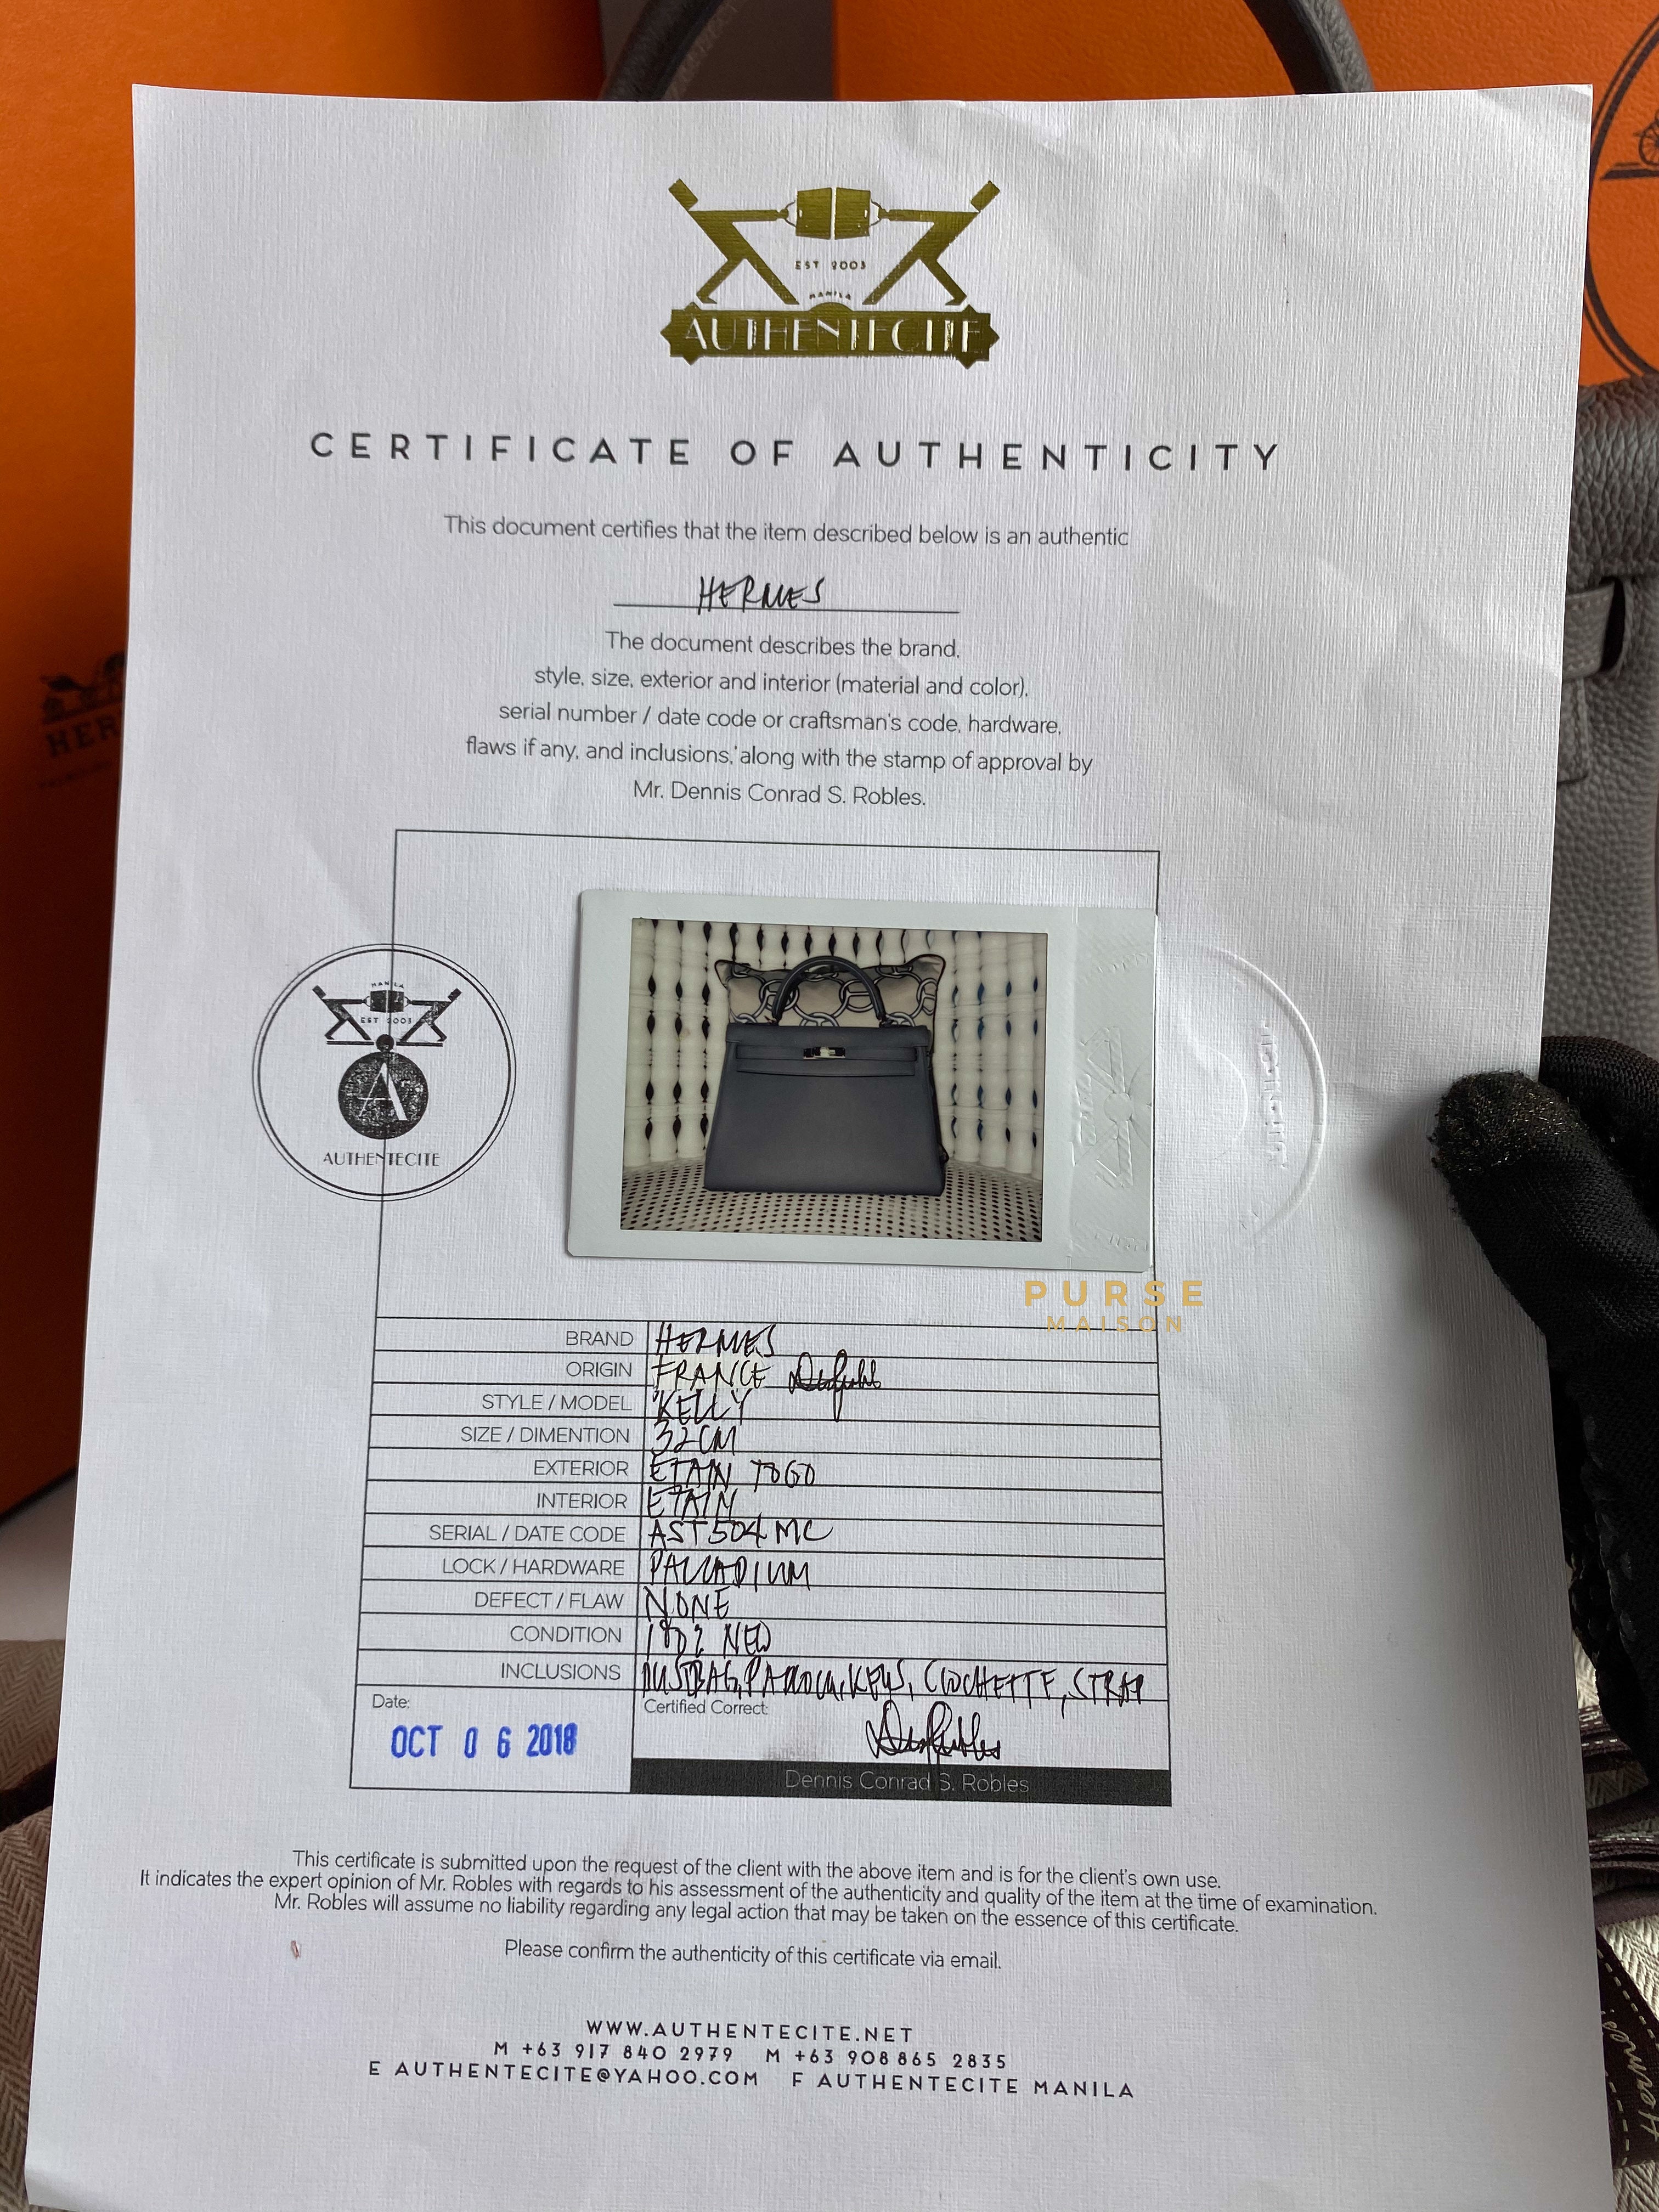 Hermes Kelly 32 Retourne Etain Togo and Palladium Hardware Stamp A | Purse Maison Luxury Bags Shop